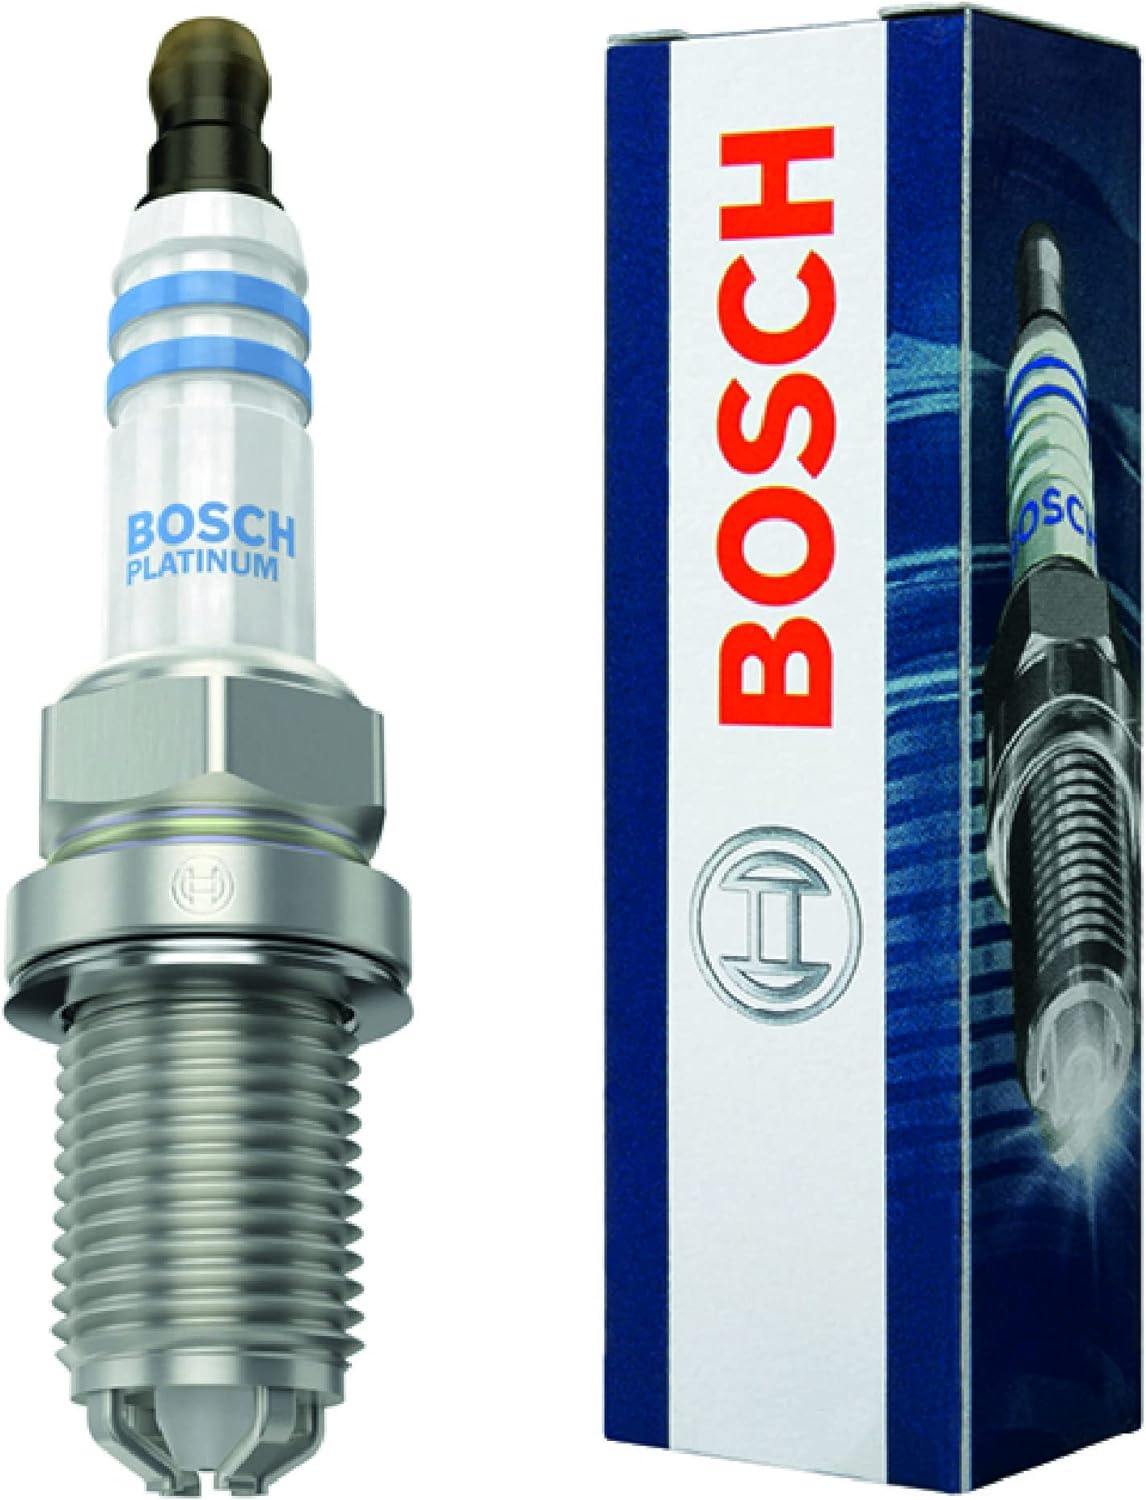 Bosch Platinum+4 Spark Plug 6743 Single